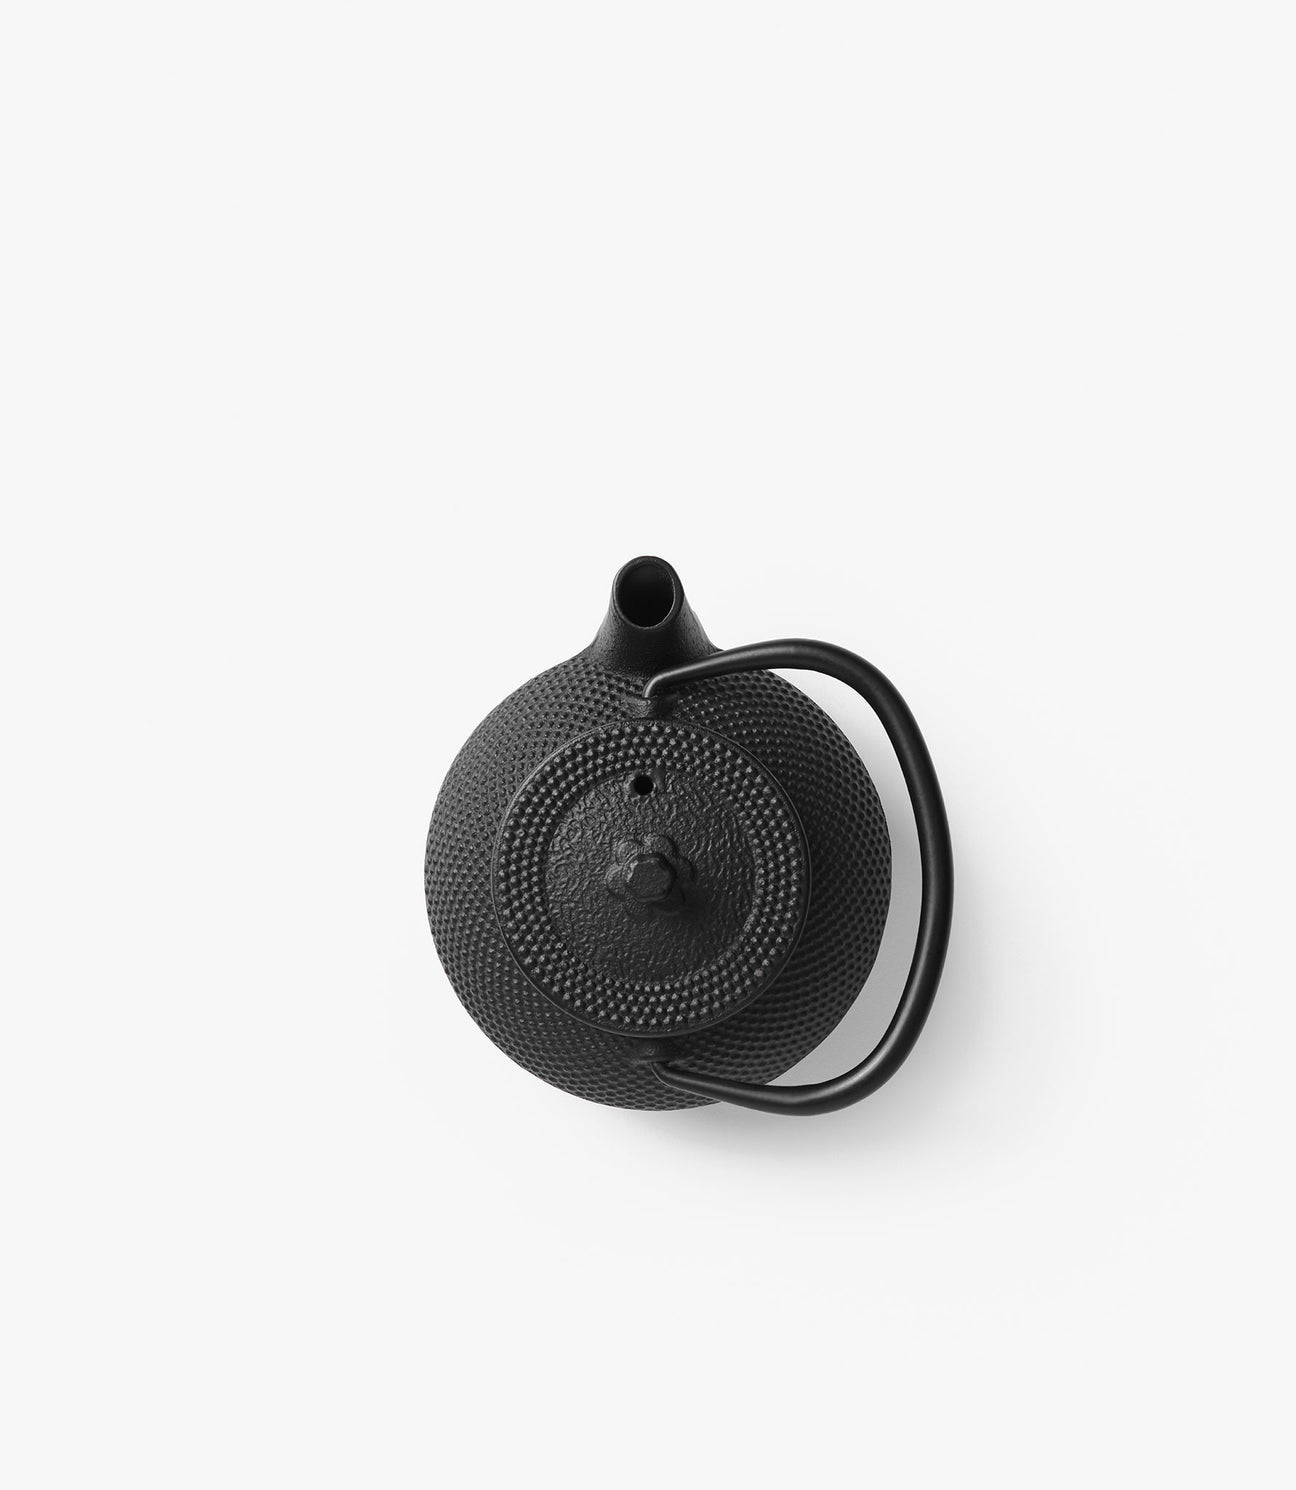 Small handcrafted cast iron teapot 0.3l - HJEM kensington